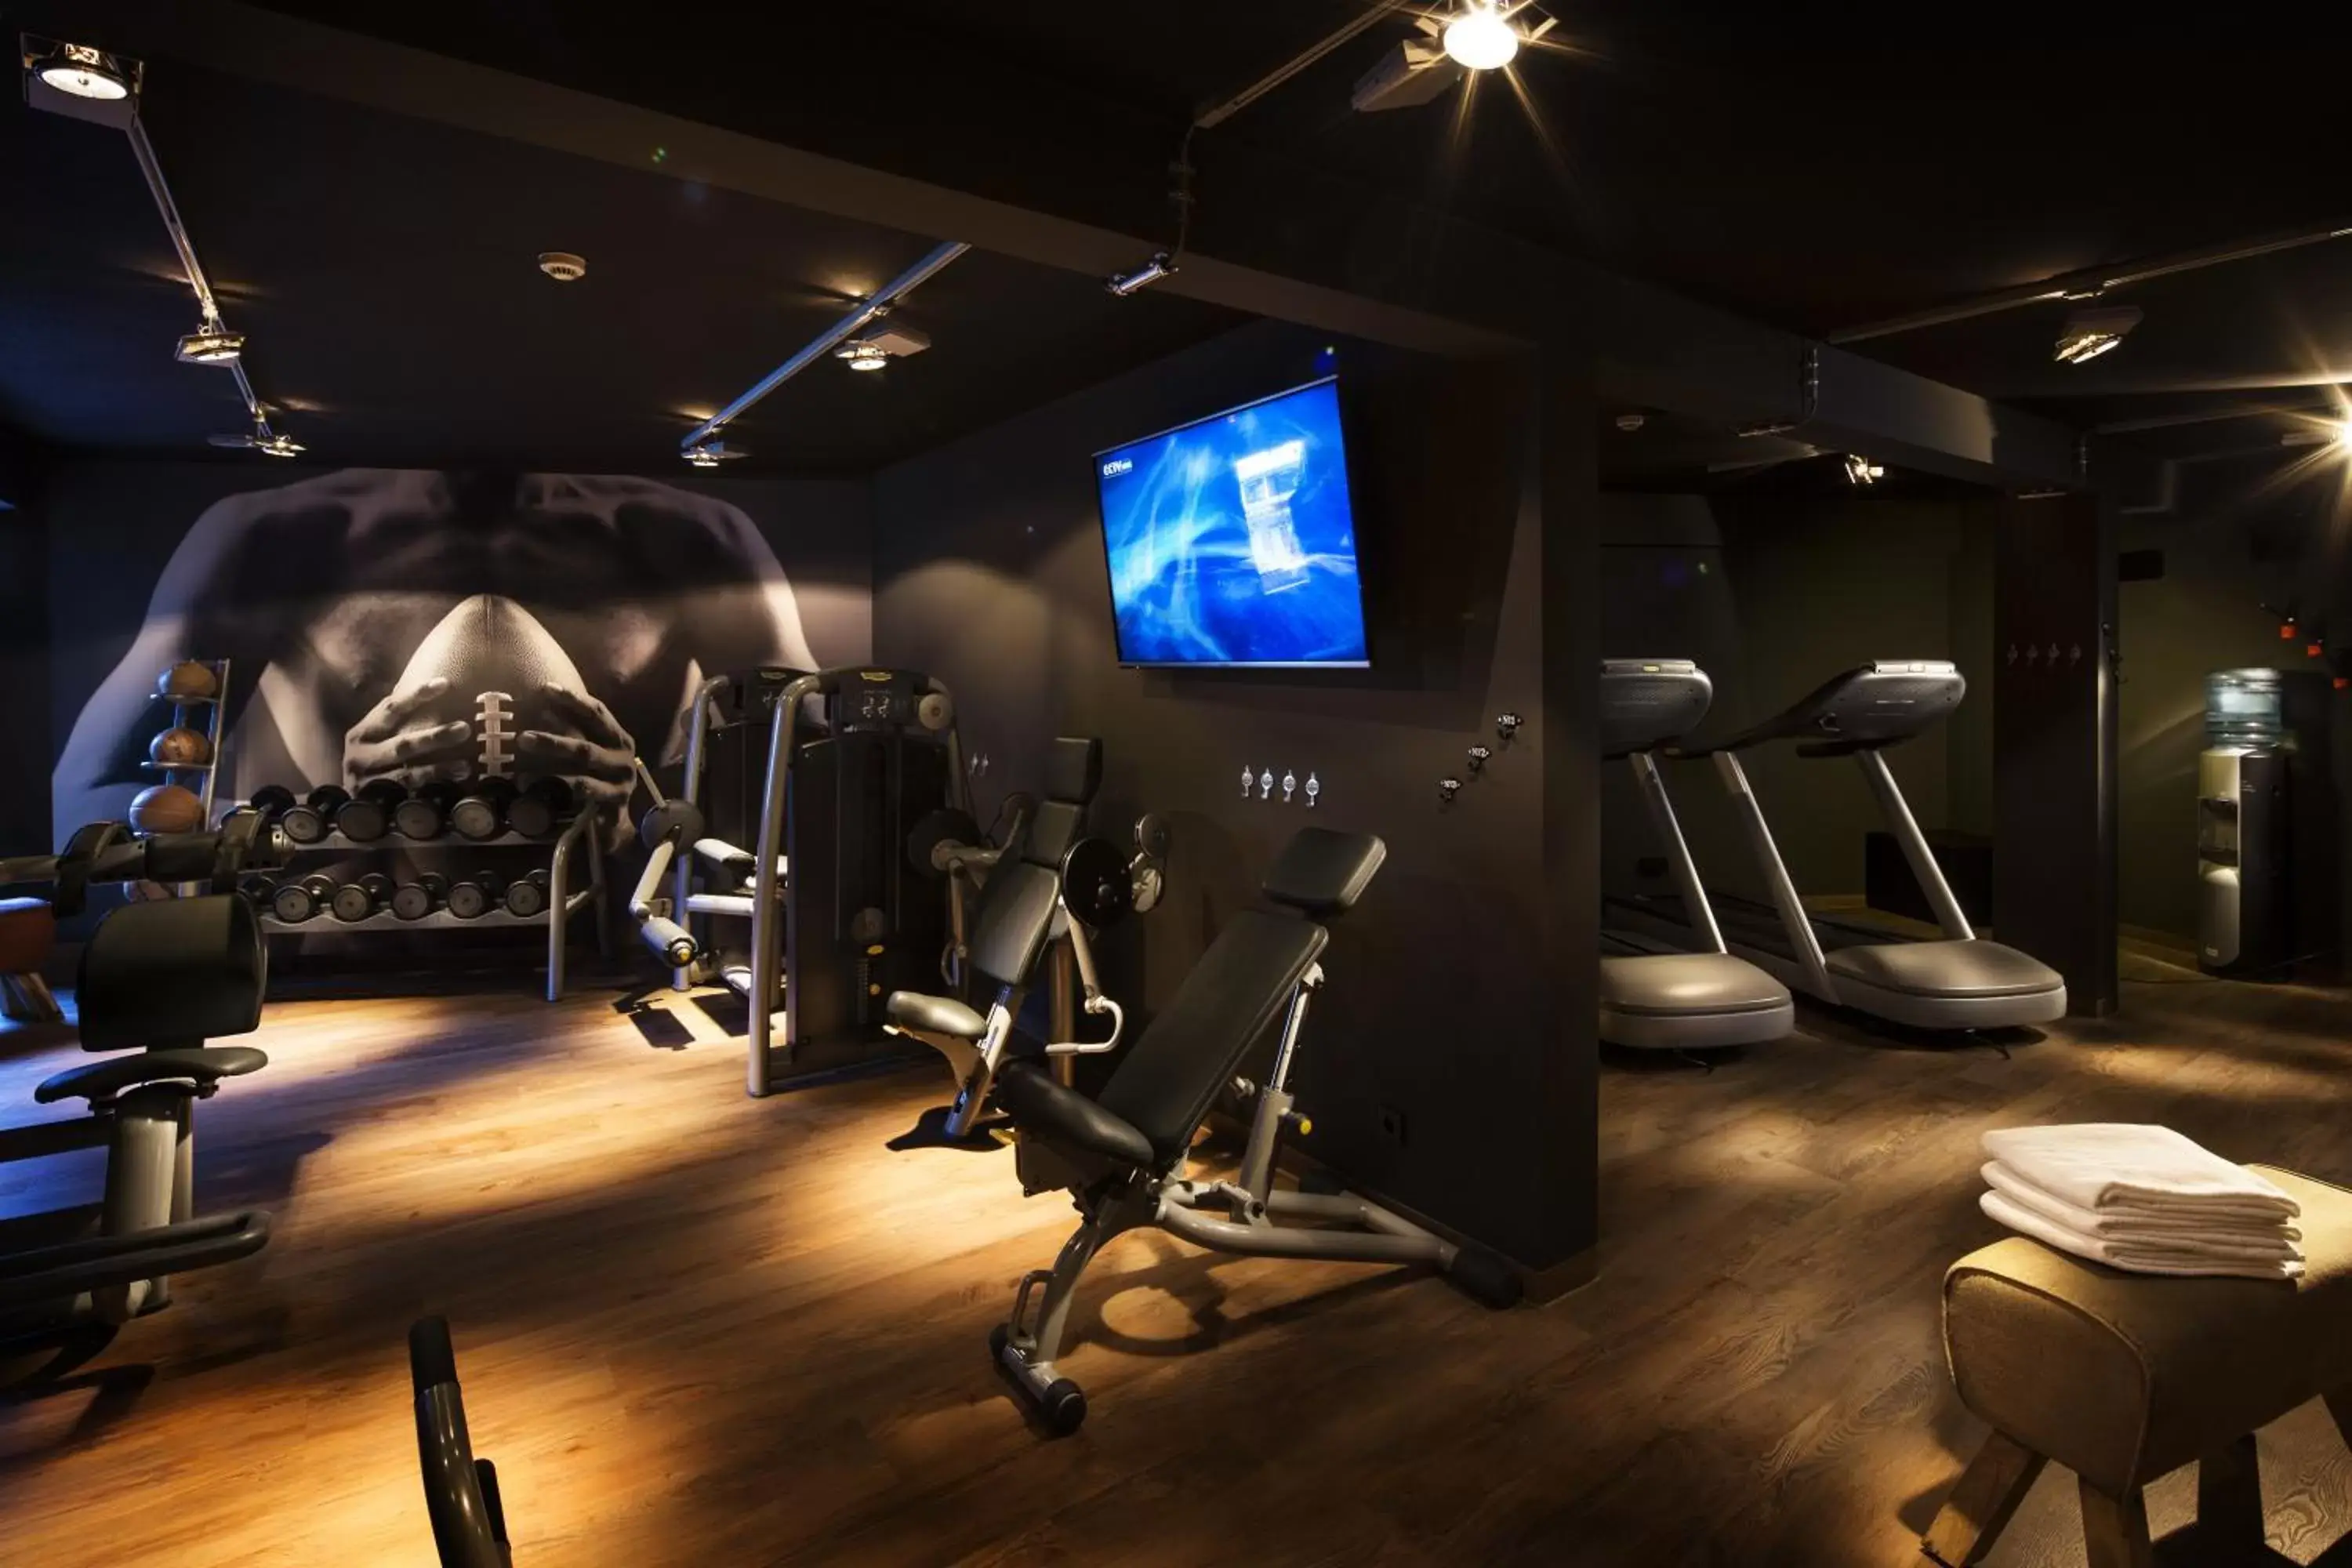 Fitness centre/facilities, Fitness Center/Facilities in pentahotel Liège